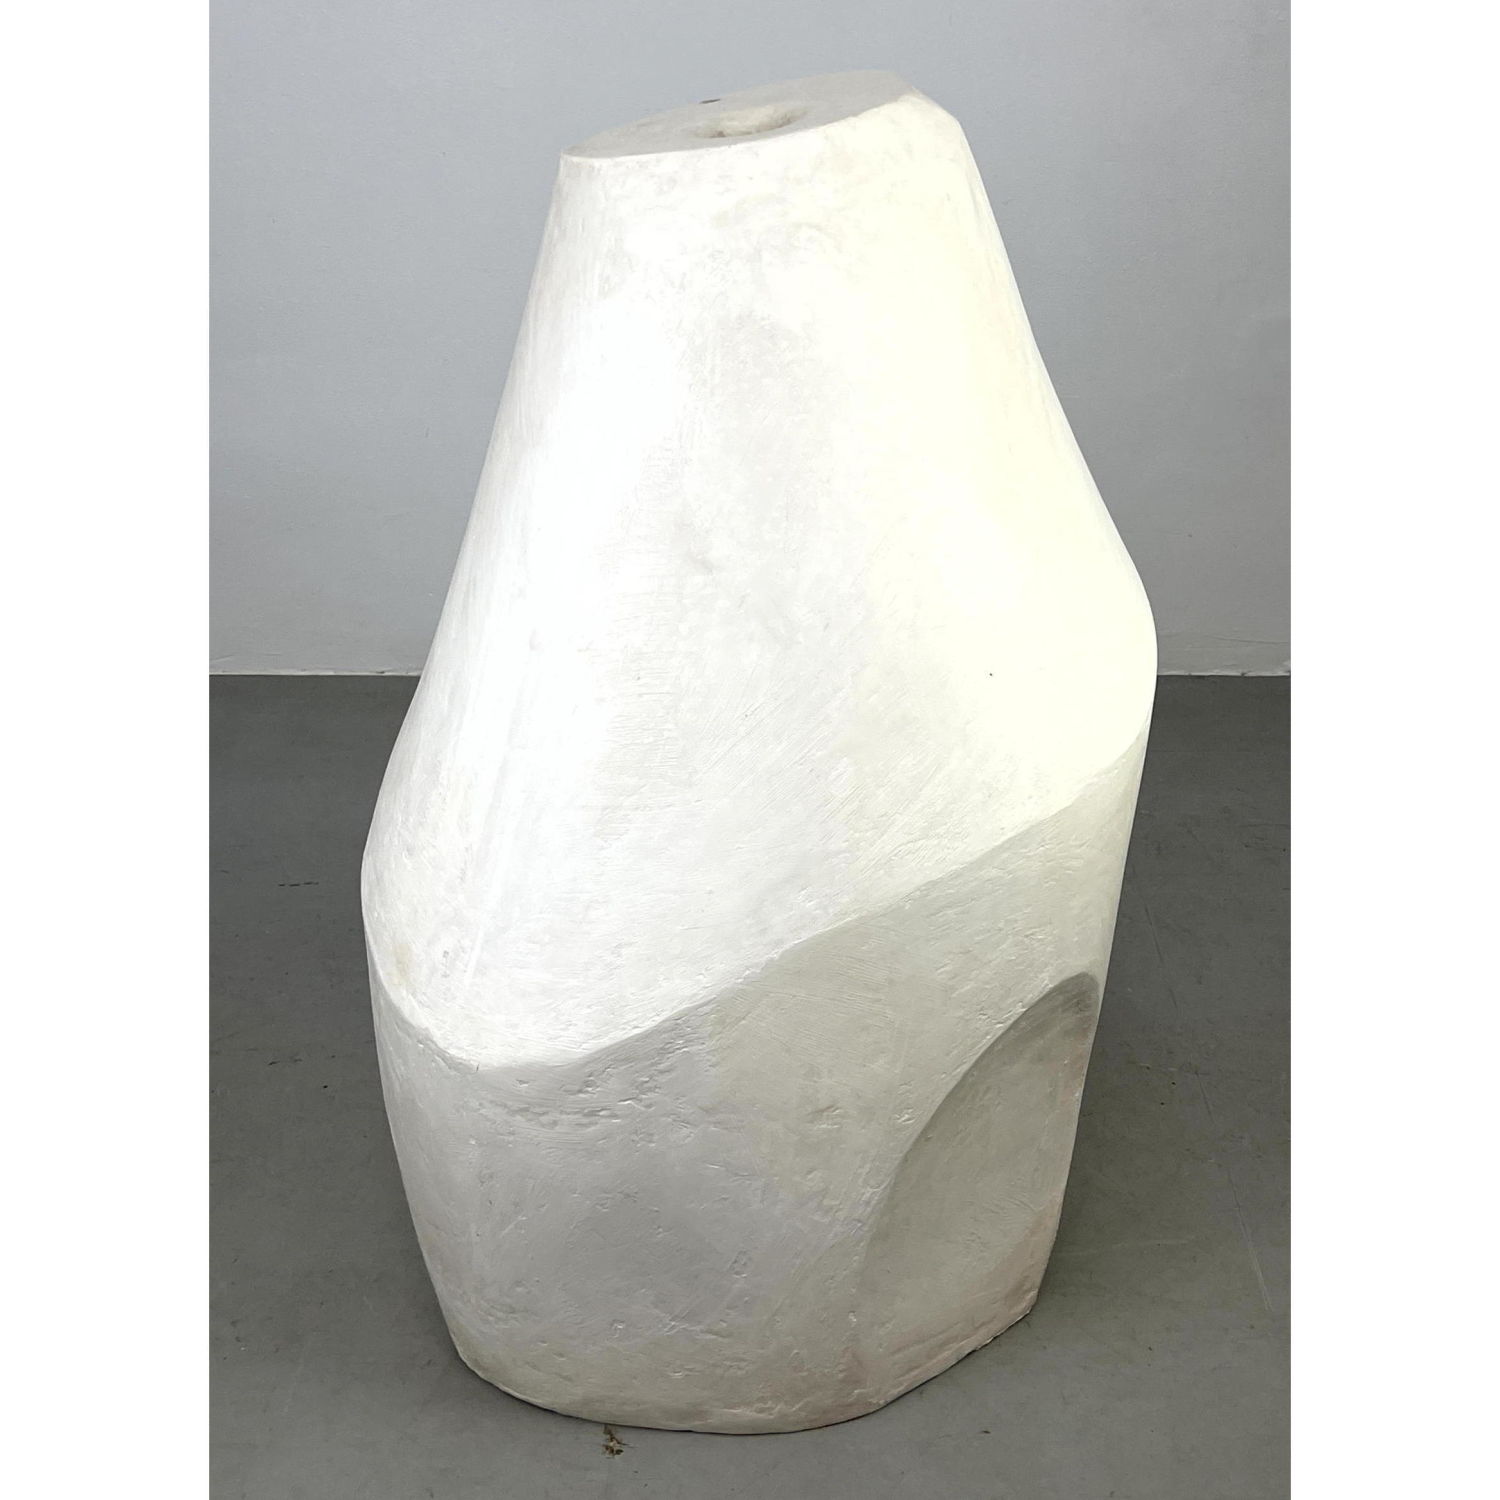 Large Cast Plaster Sculptural Form 2b89ce